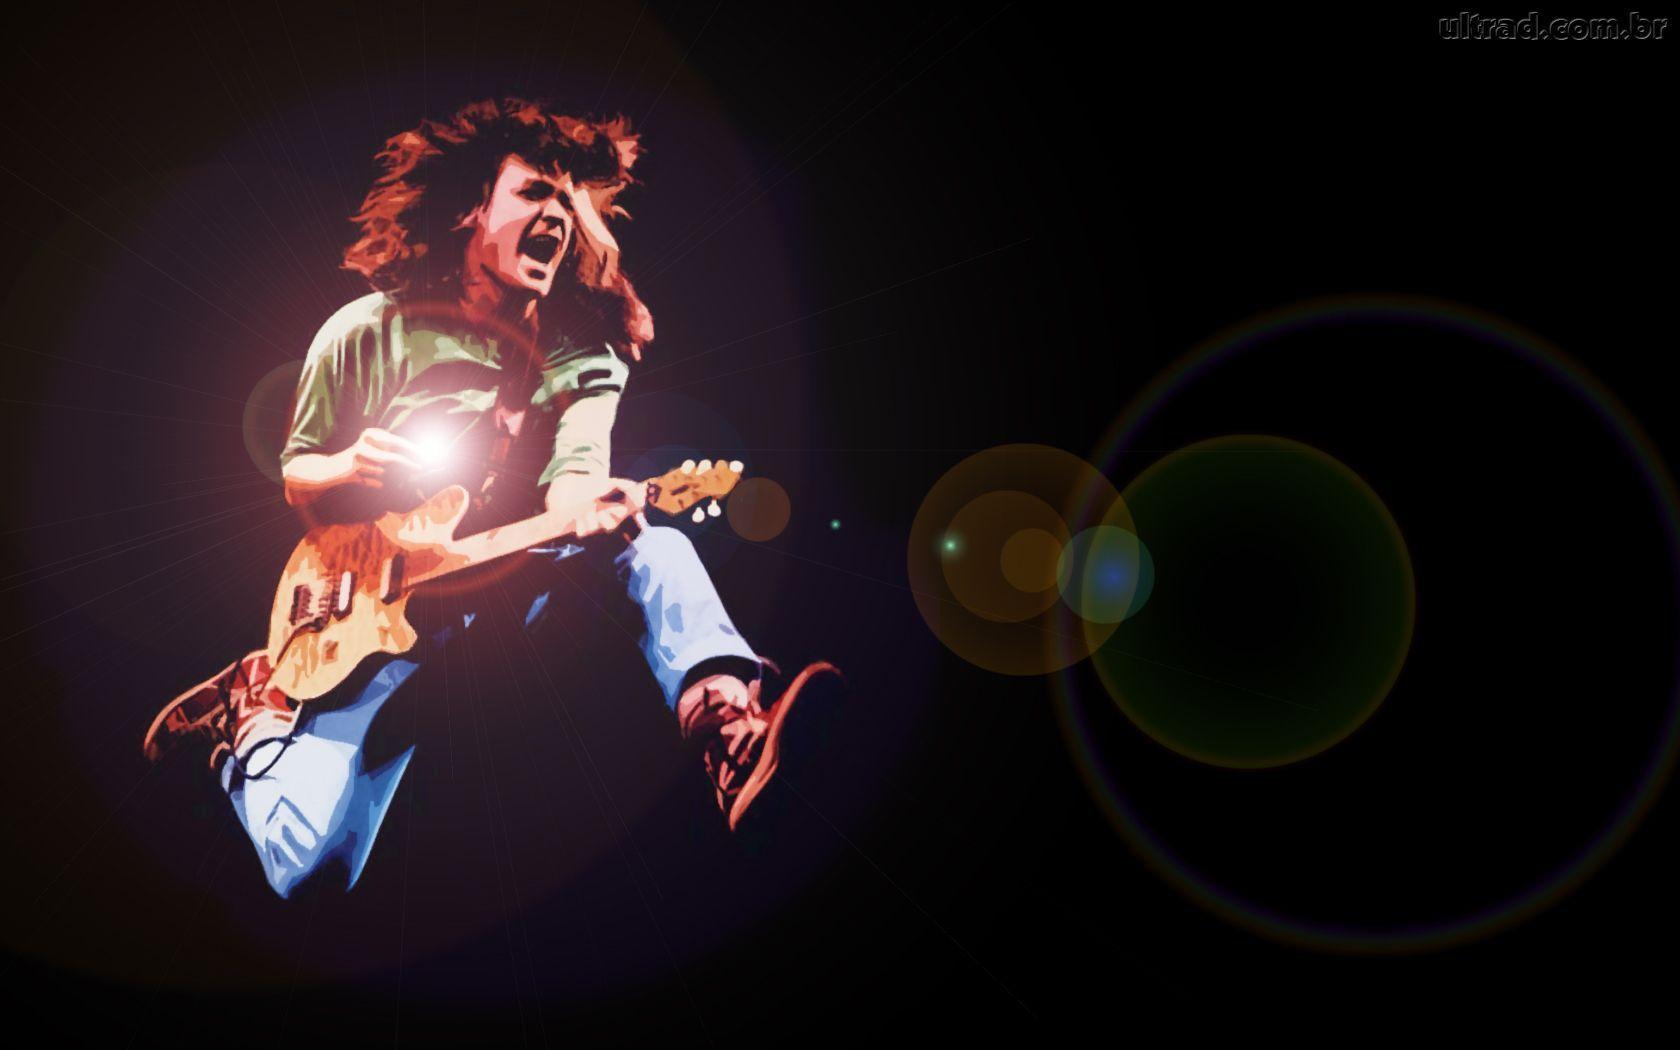 Eddie Van Halen image 222 HD wallpaper and background photo